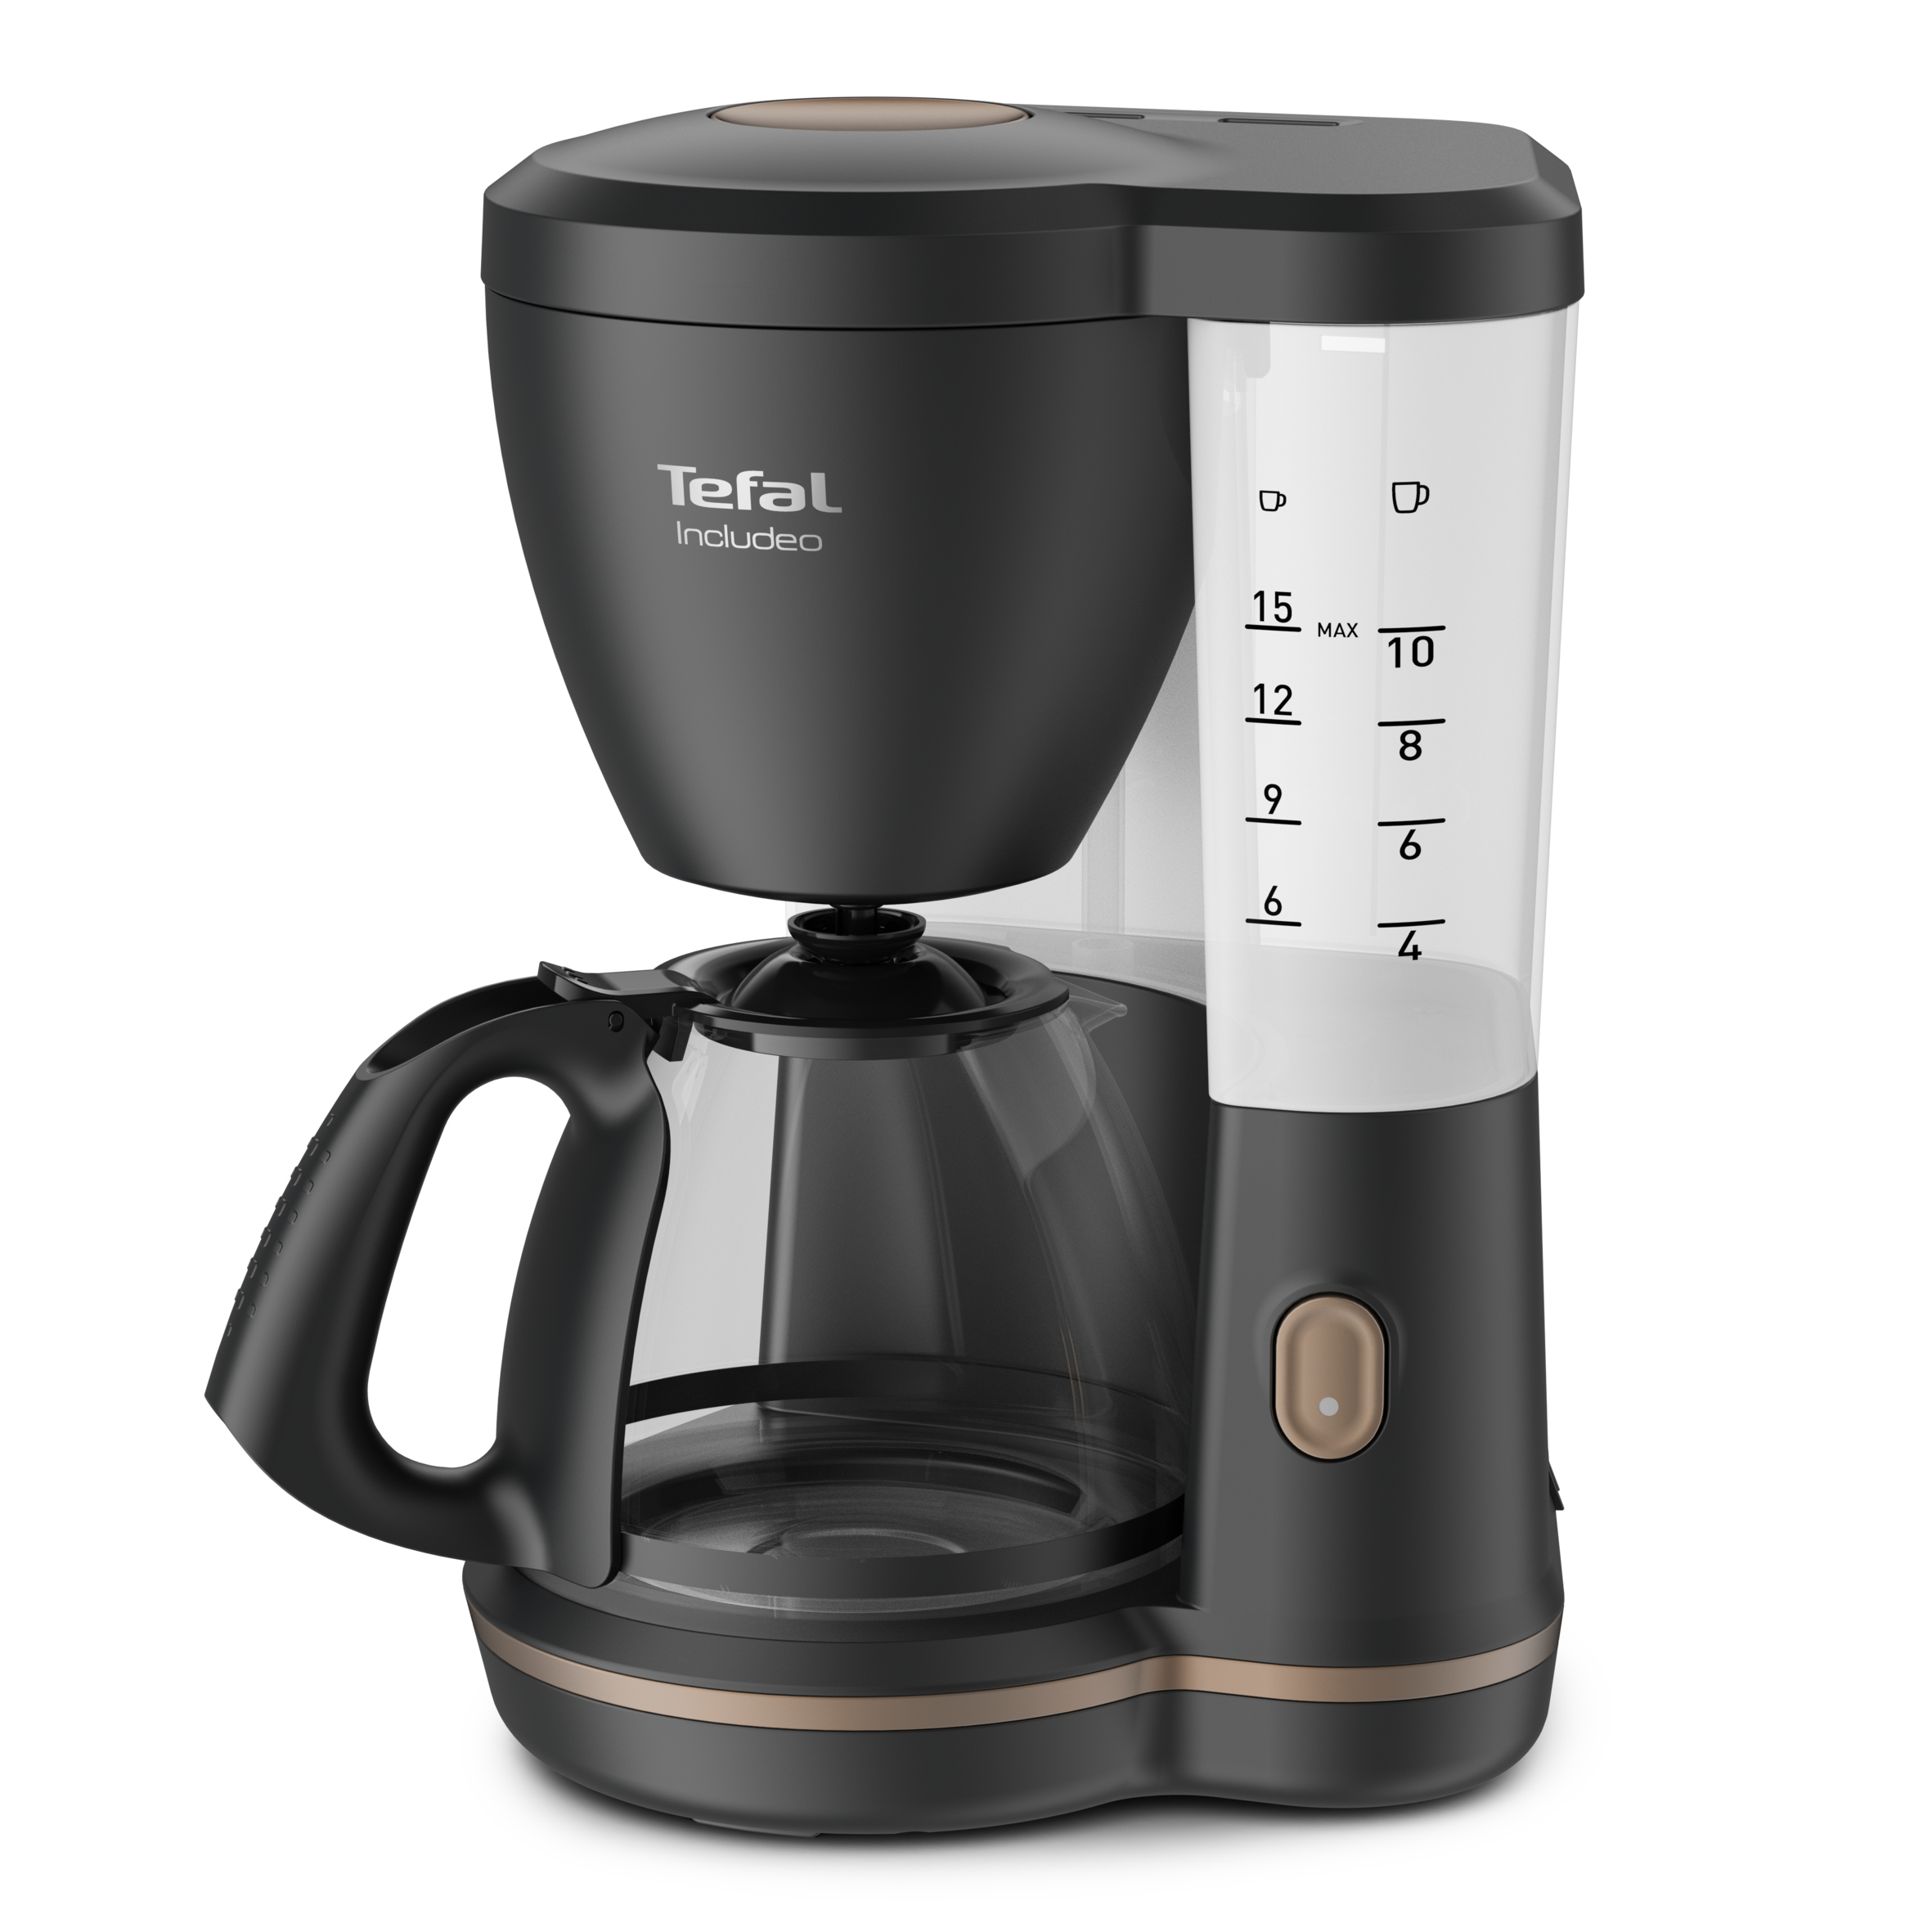 Tefal Includeo CM533811 coffee maker